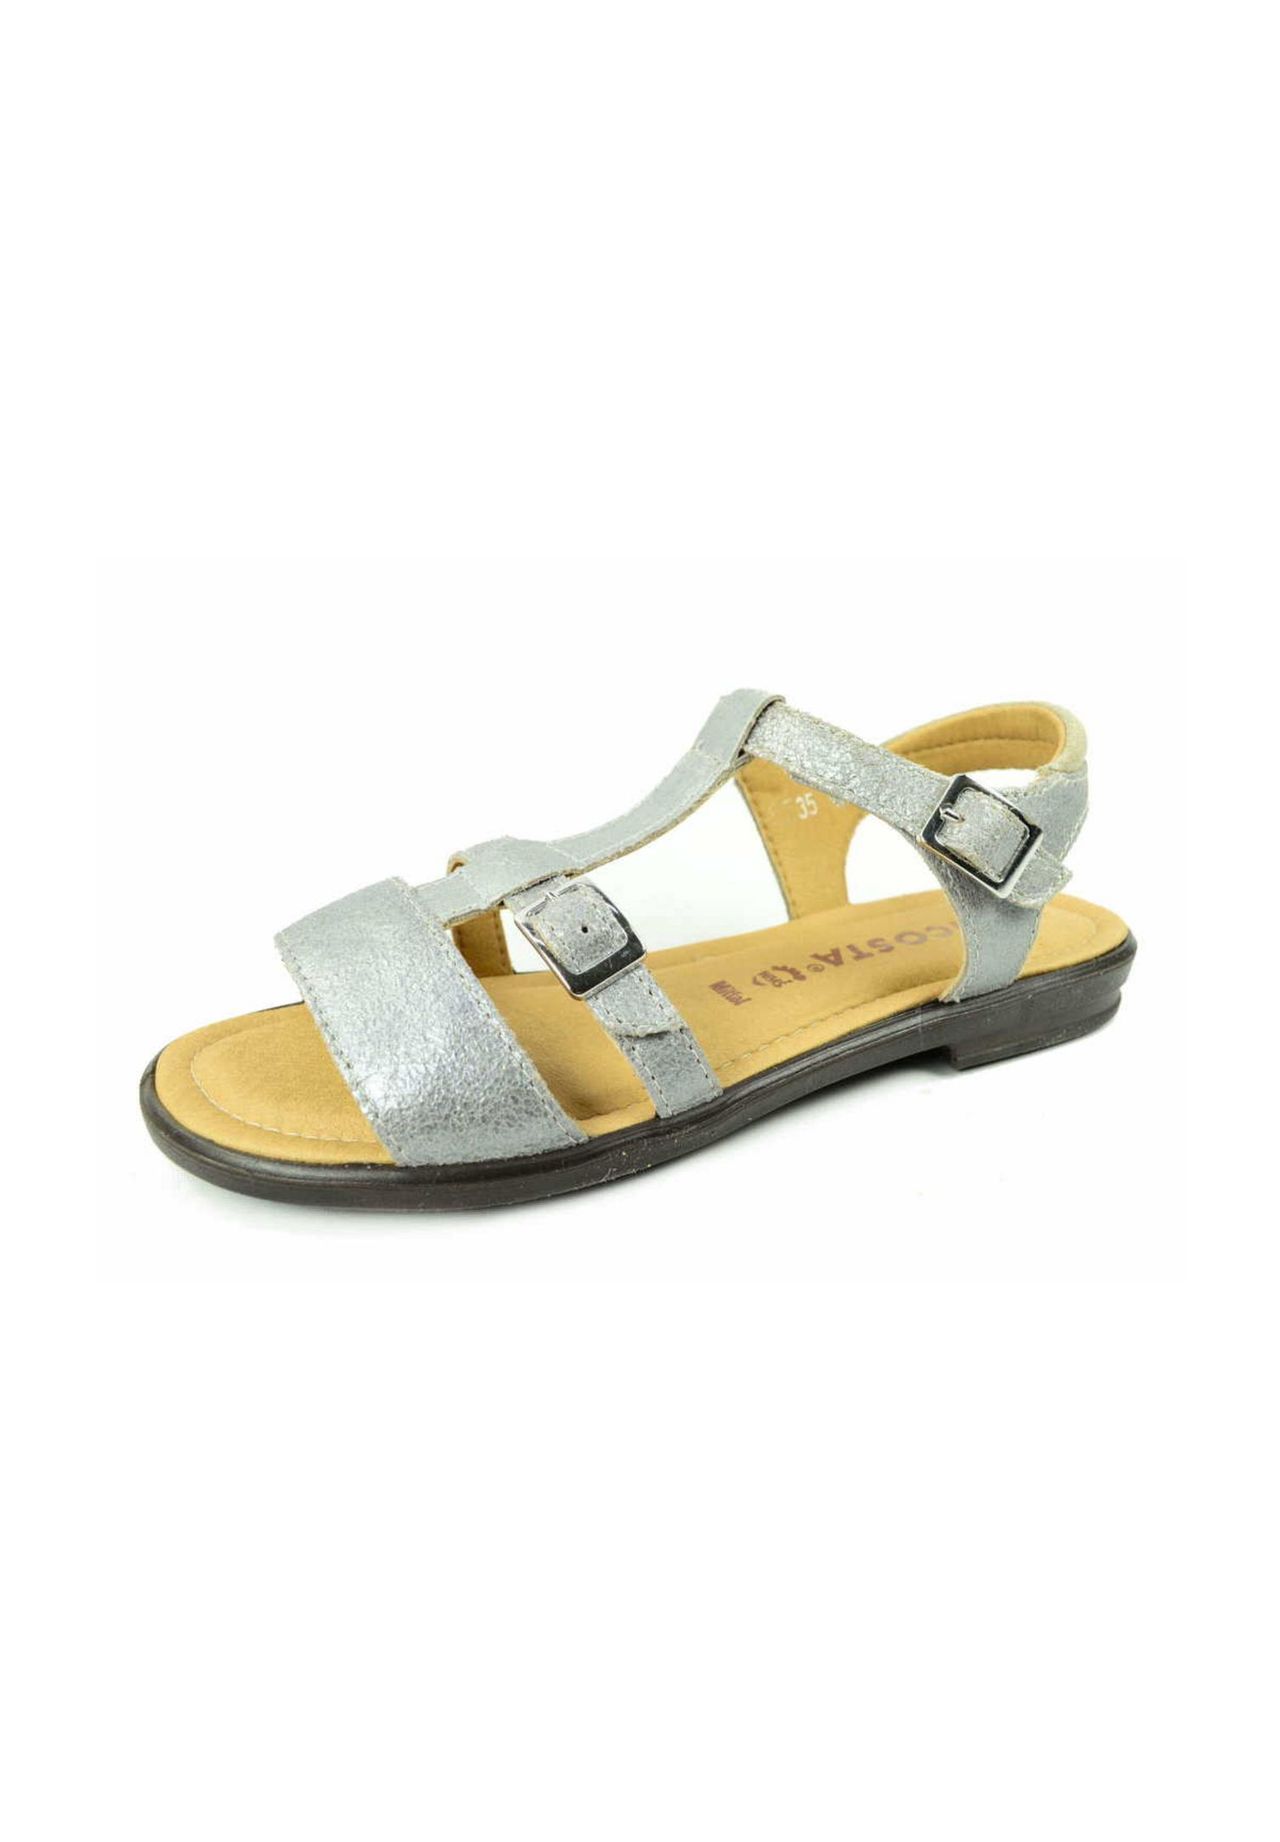 Ricosta sandale 37 kaufen | GALERIA